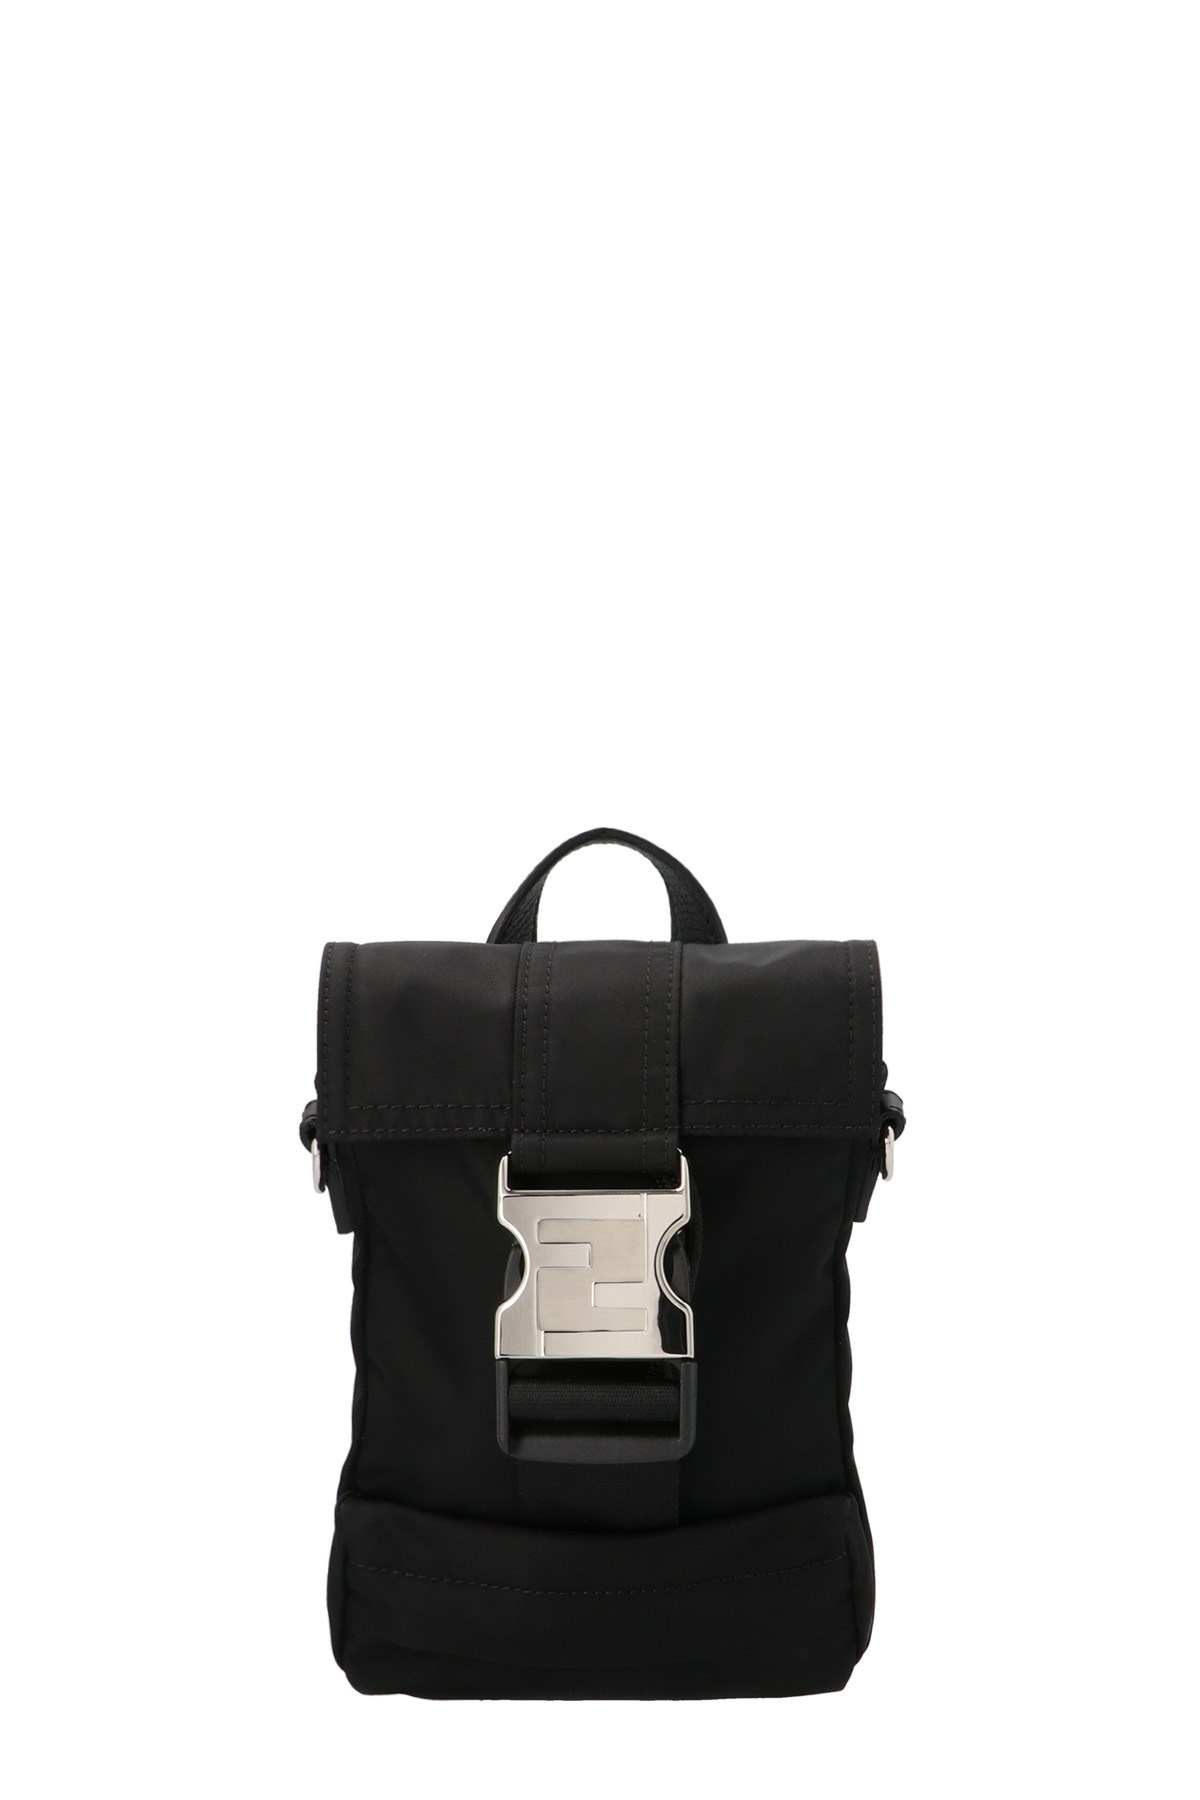 FENDI 'Fendiness Mini’ Crossbody Bag